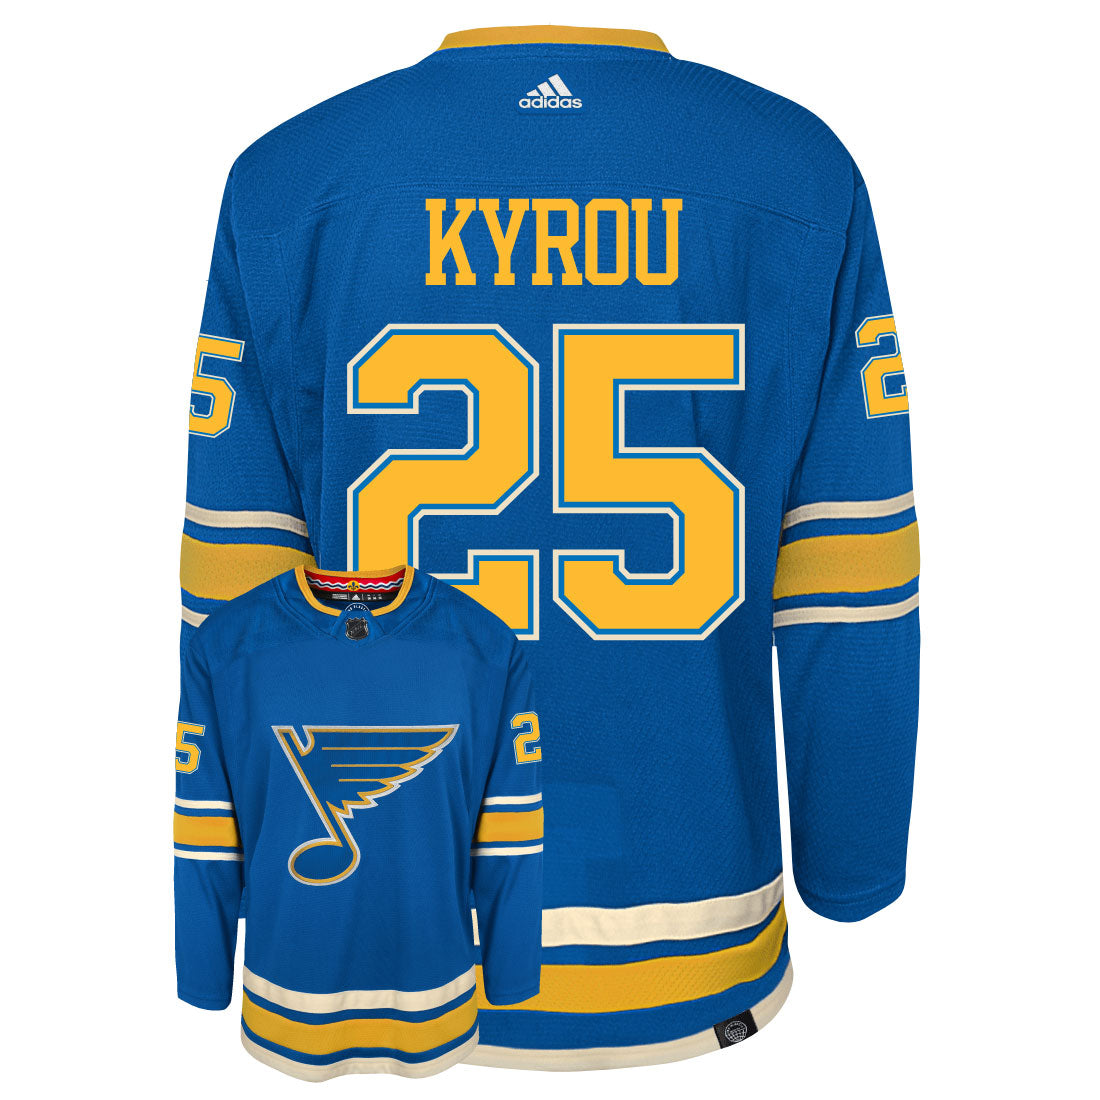 Jordan Kyrou St Louis Blues Adidas Primegreen Authentic Third Alternate NHL Hockey Jersey - Back/Front View